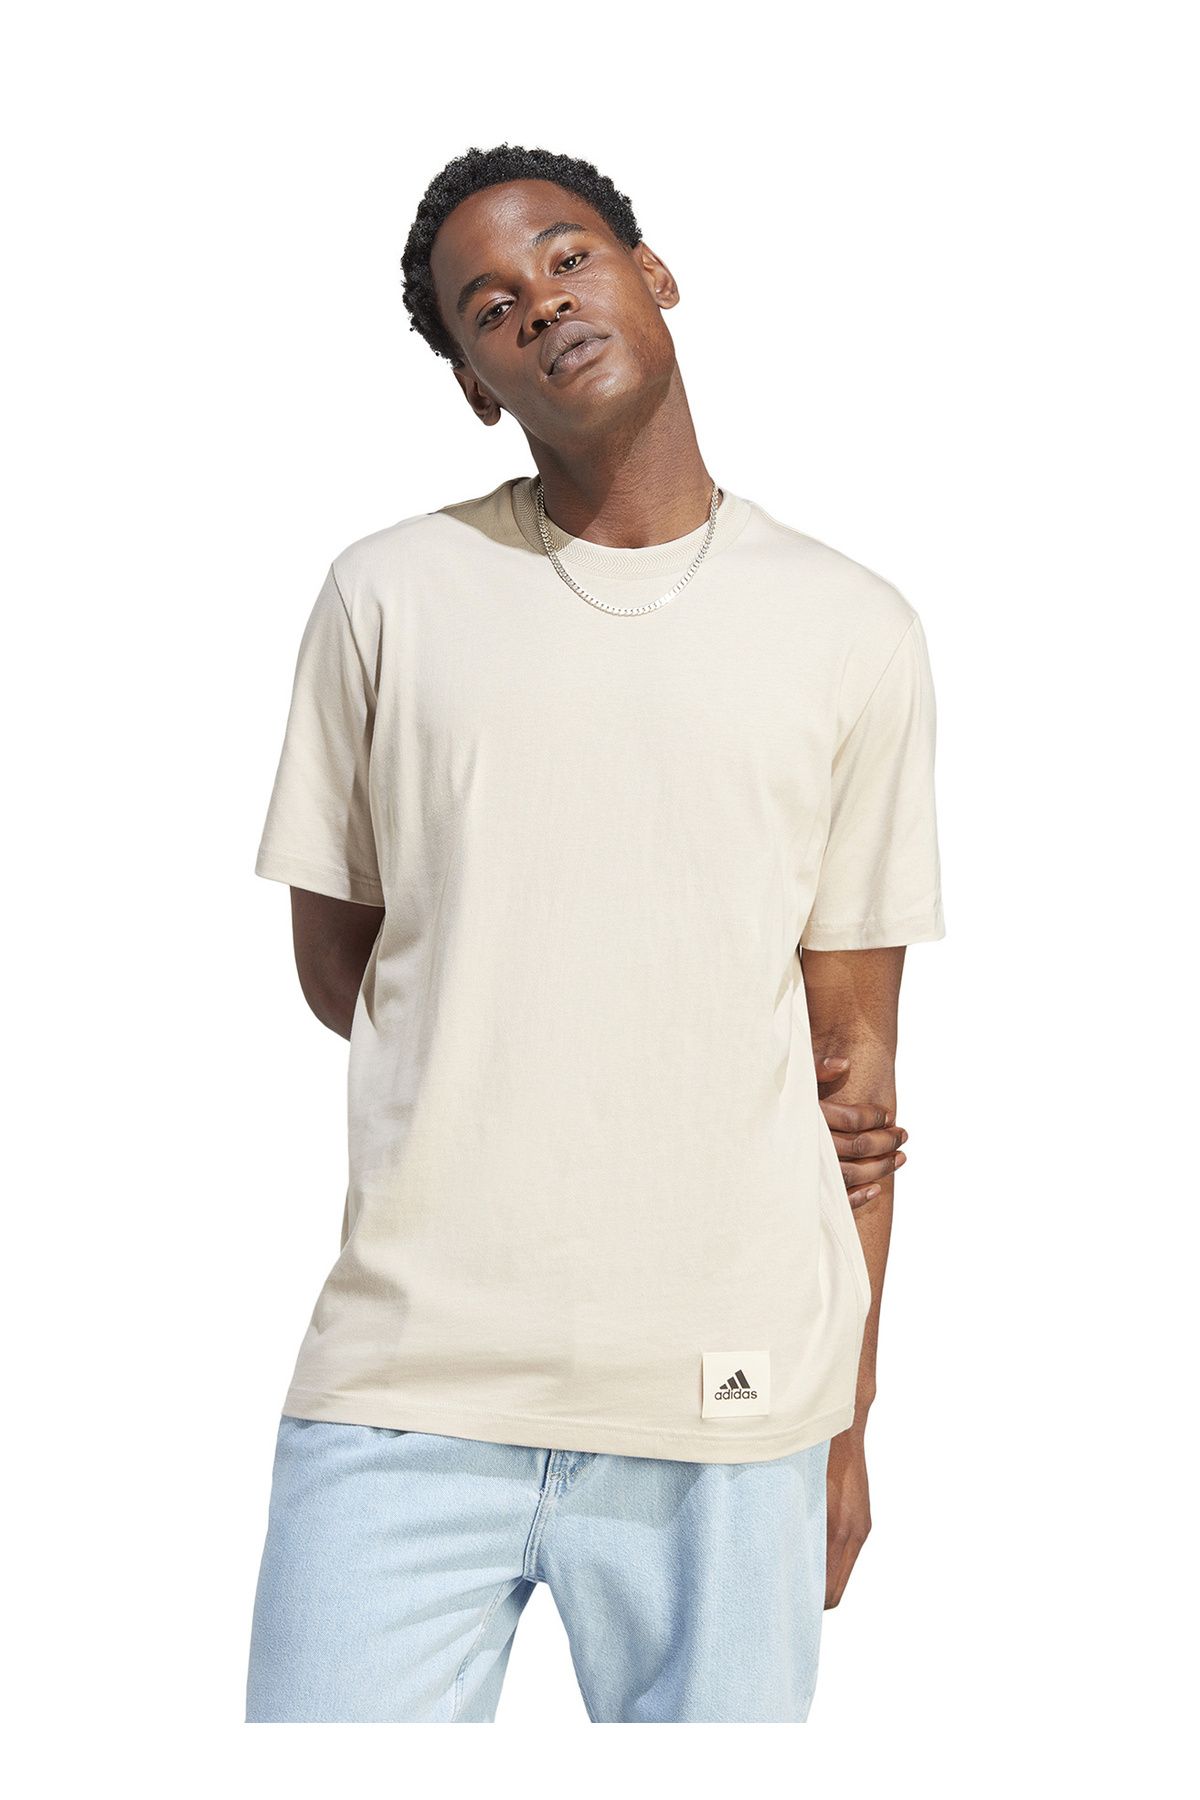 adidas T-Shirt, M, Koyu Bej